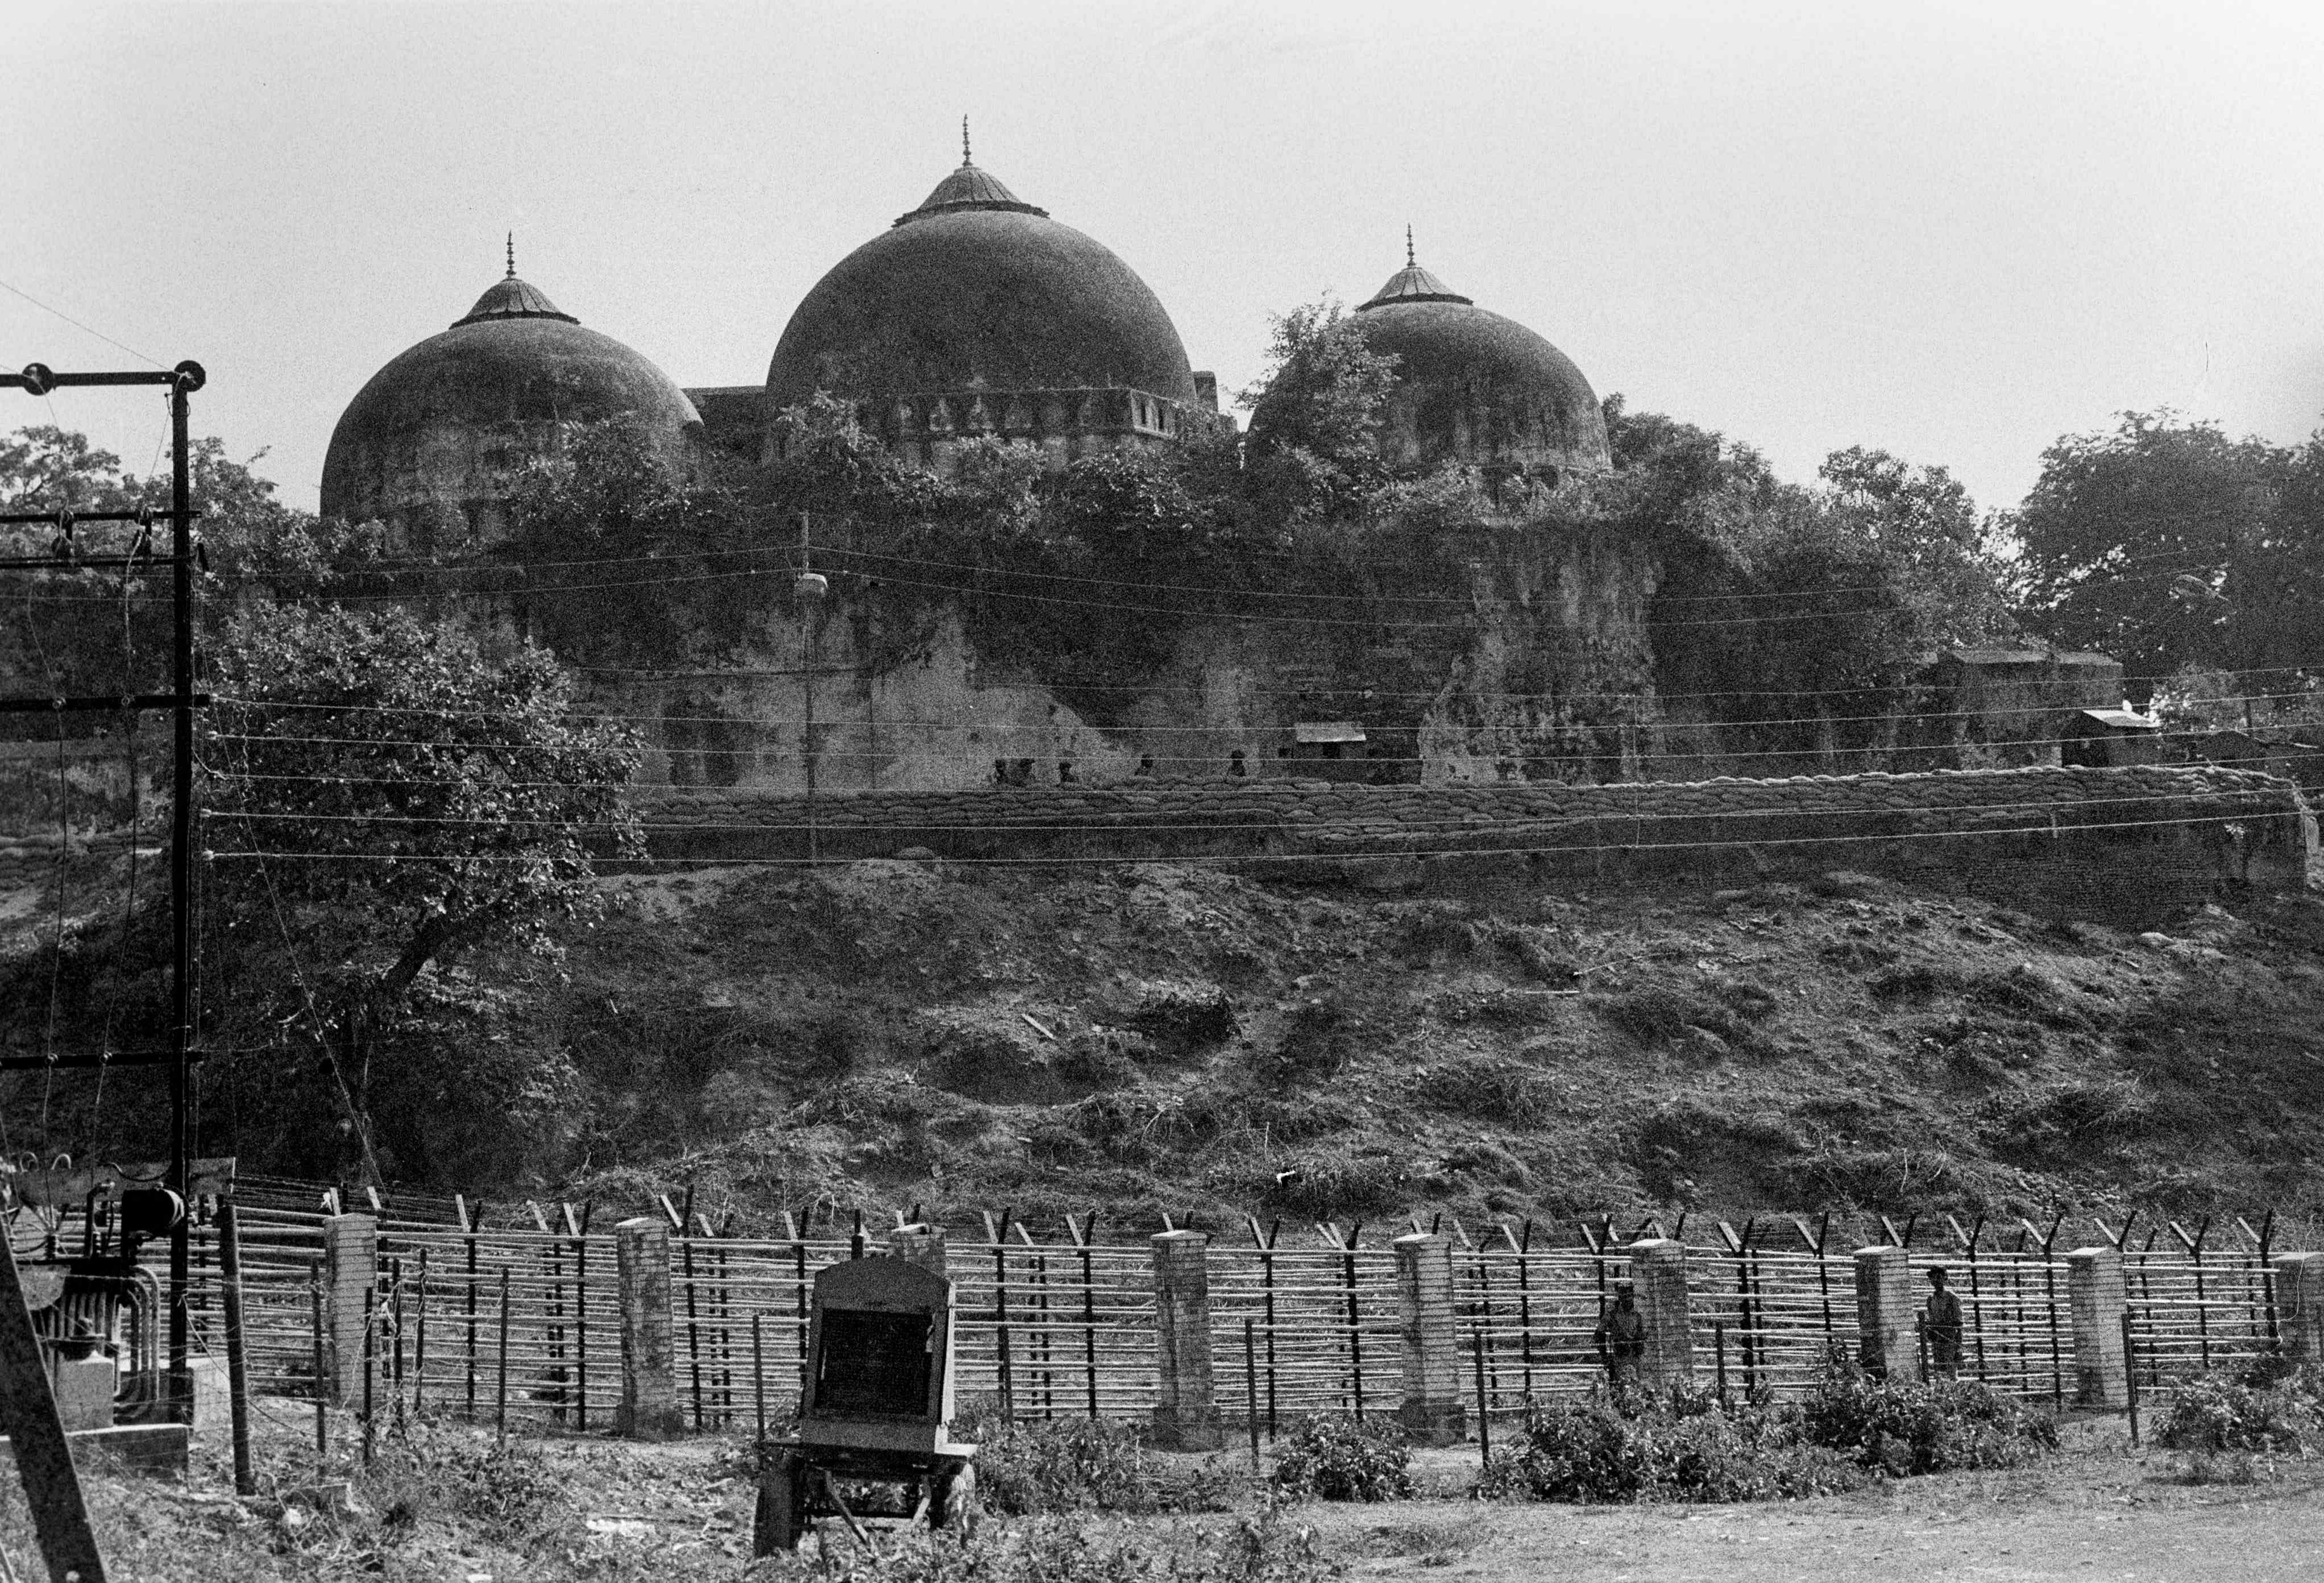 File photo dated October 1990, shows Babri Masjid in Ayodhya. (PTI)